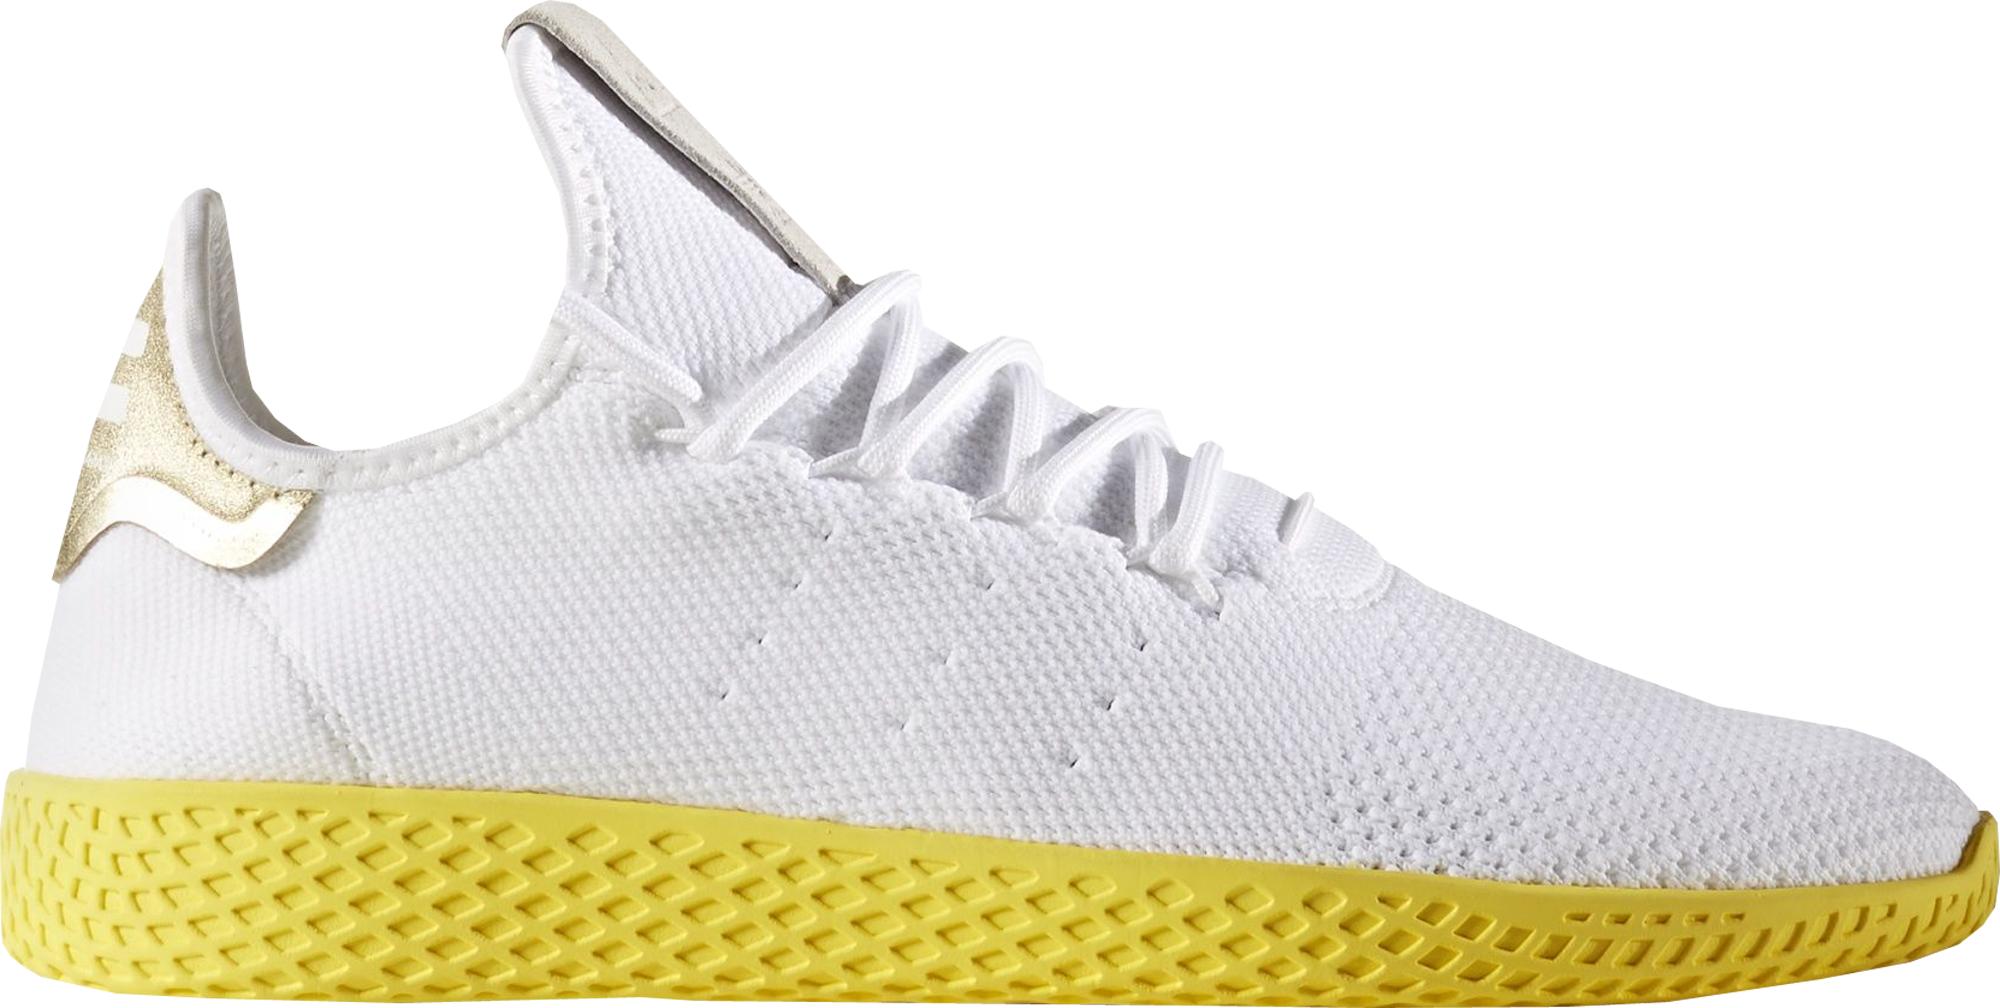 Adidas Tennis Hu Pharrell Williams Footwear White Core White